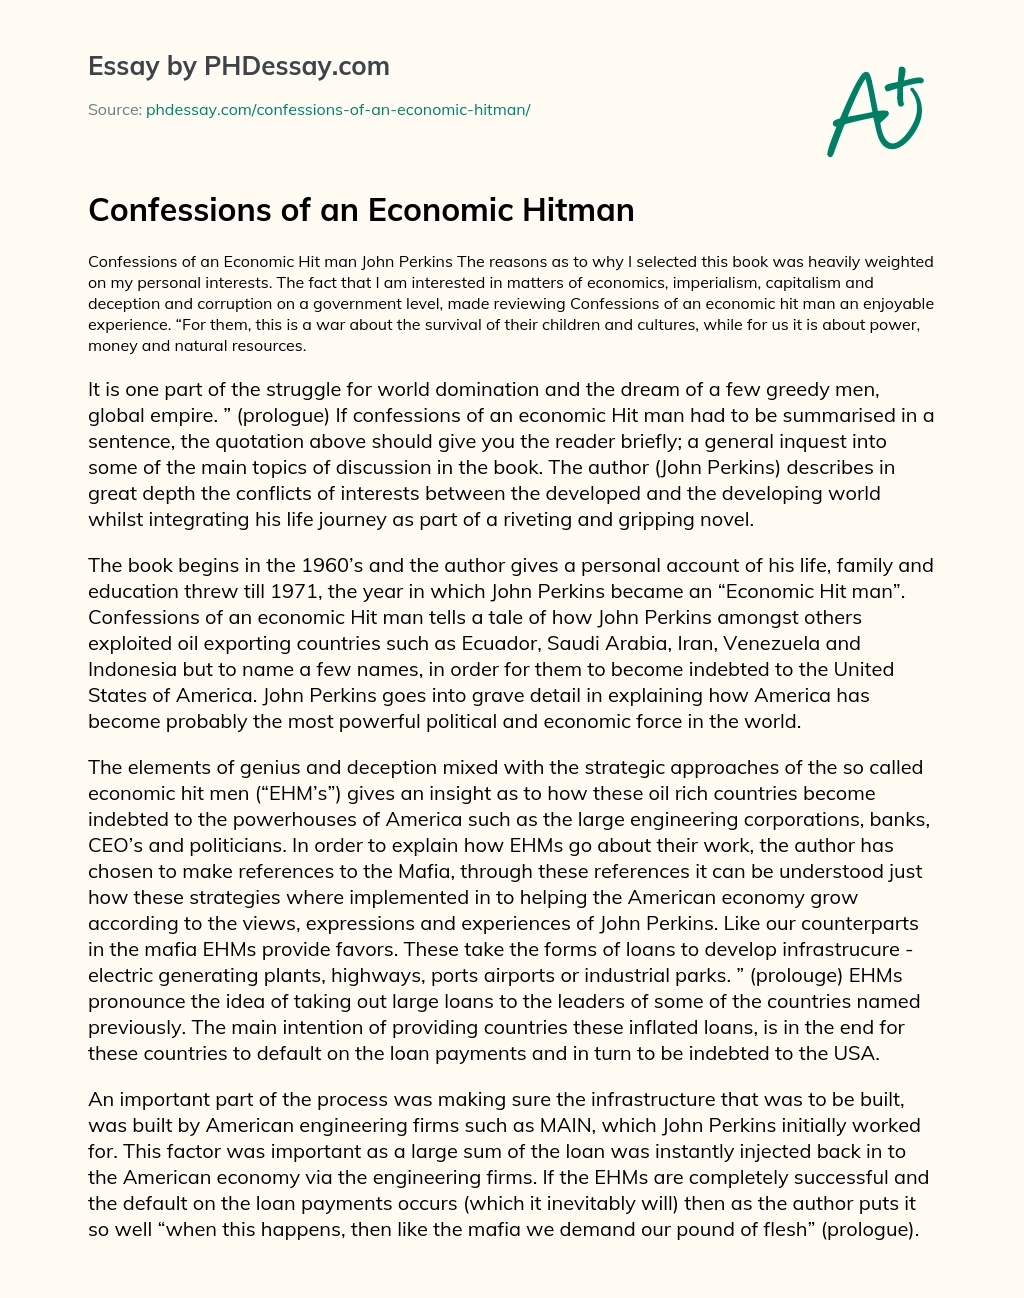 Confessions of an Economic Hitman essay